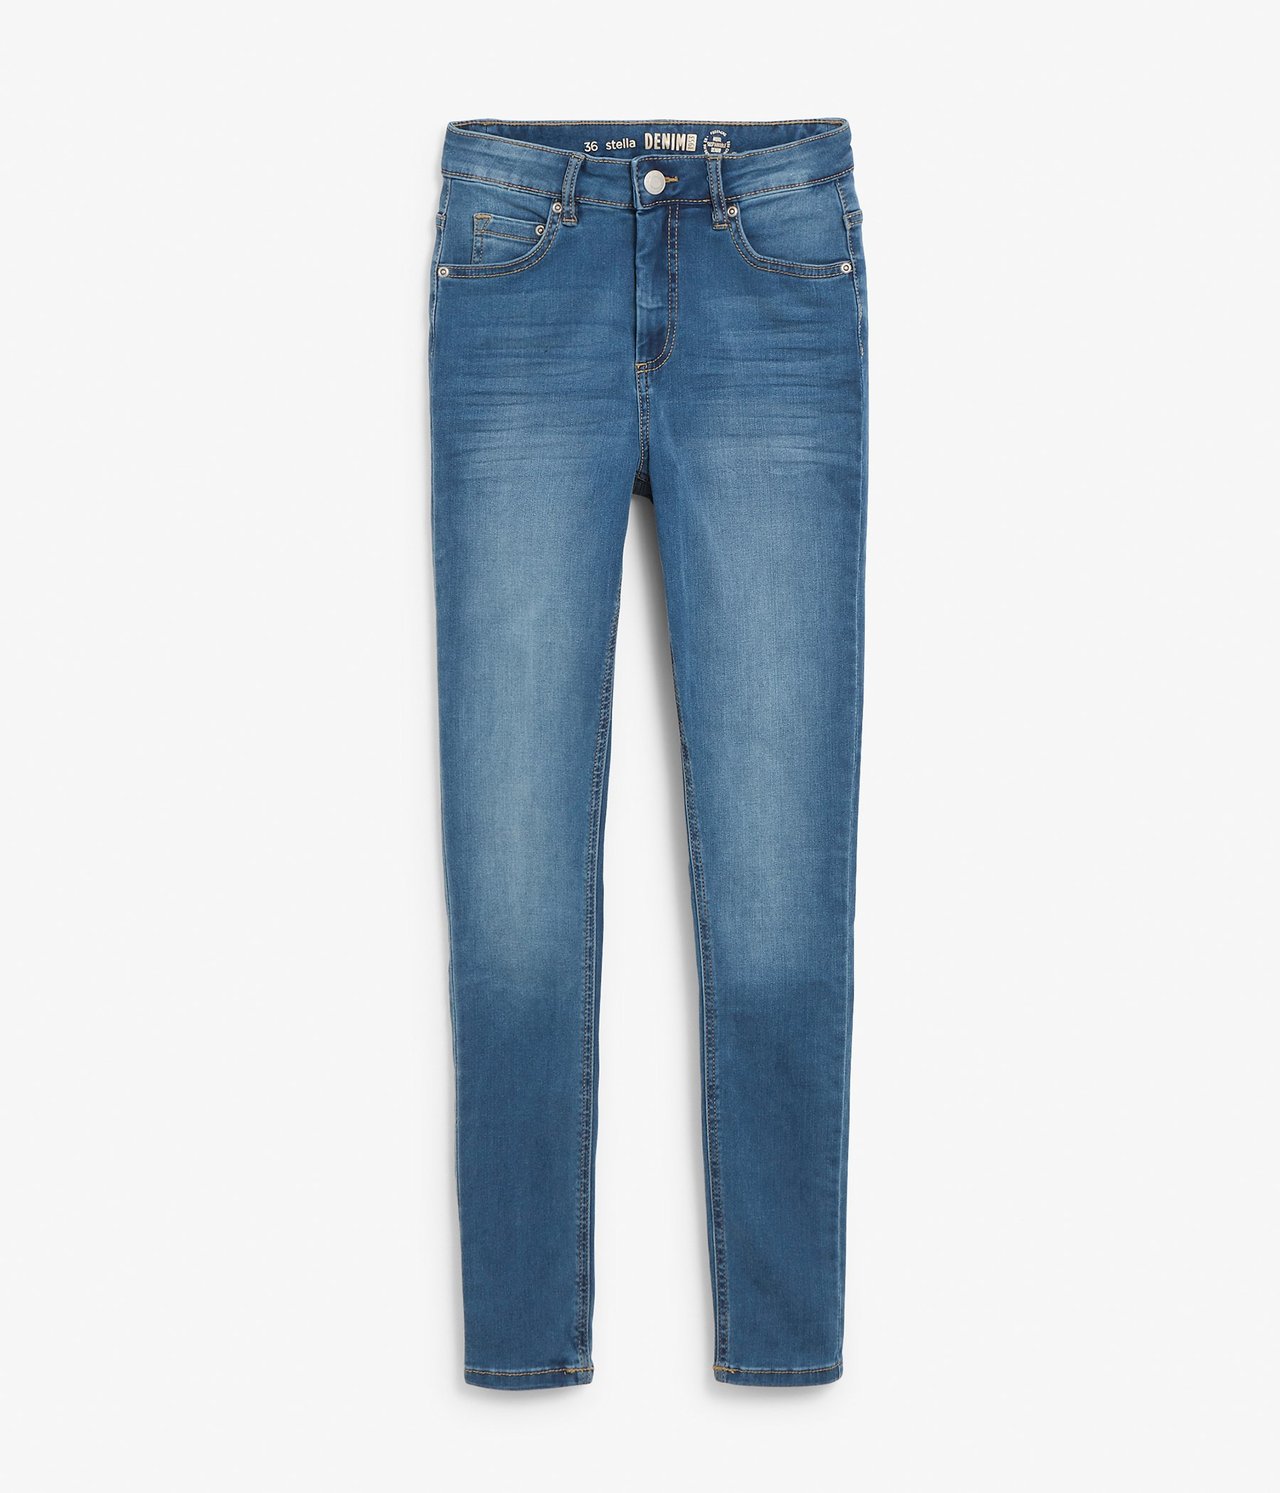 Super slim jeans extra long leg Denim - null - 1